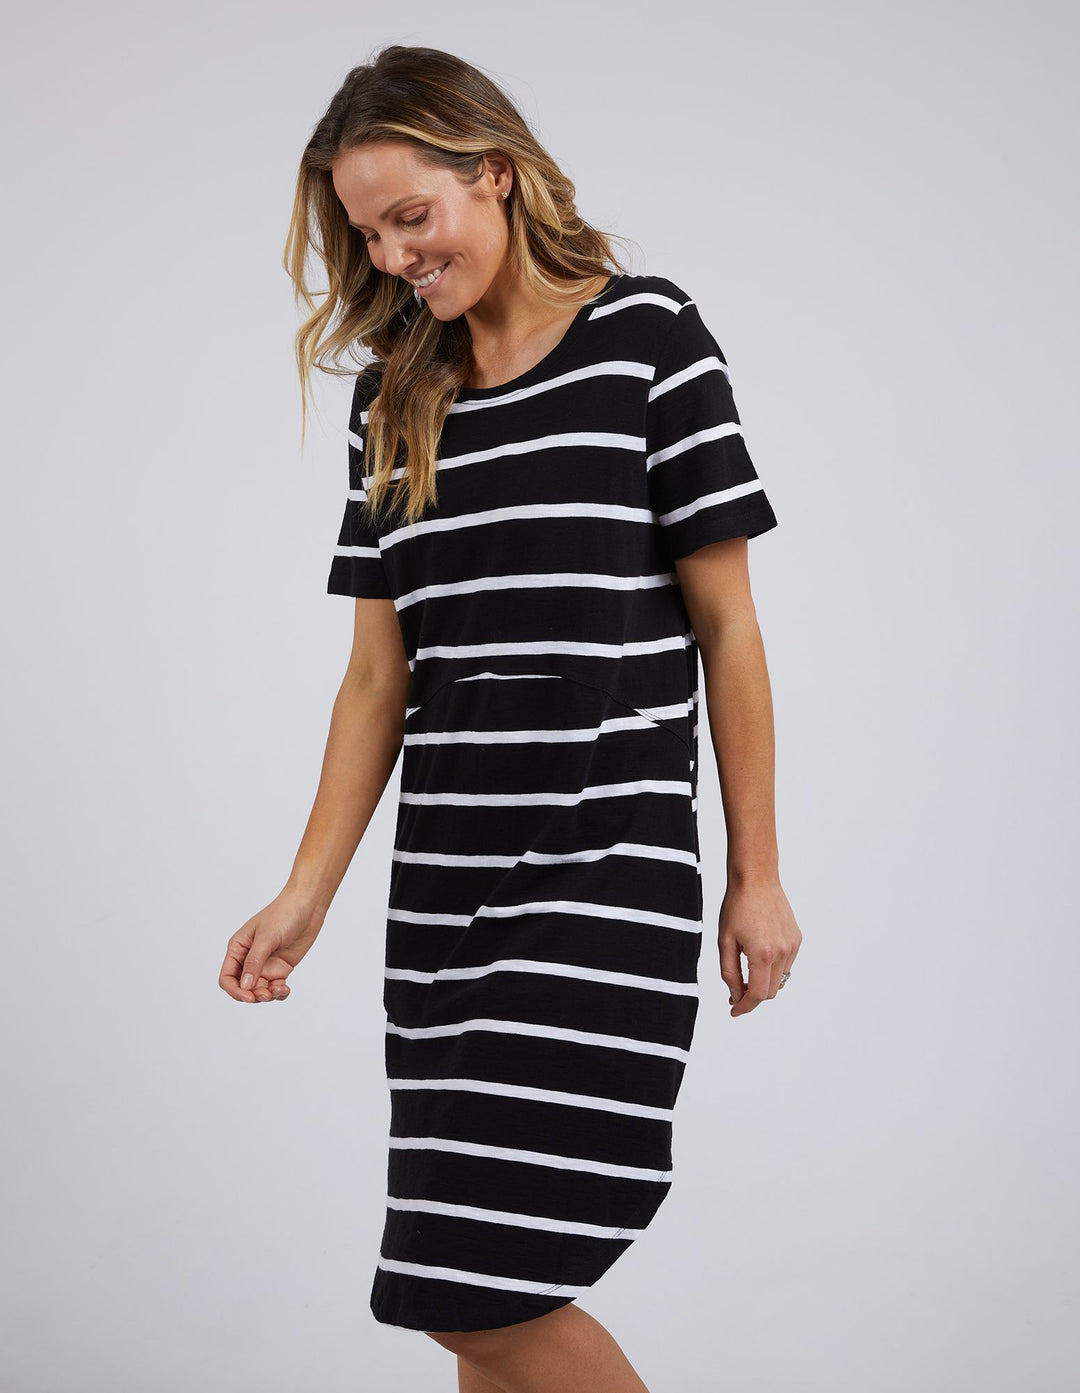 Bay Stripe Dress - Black